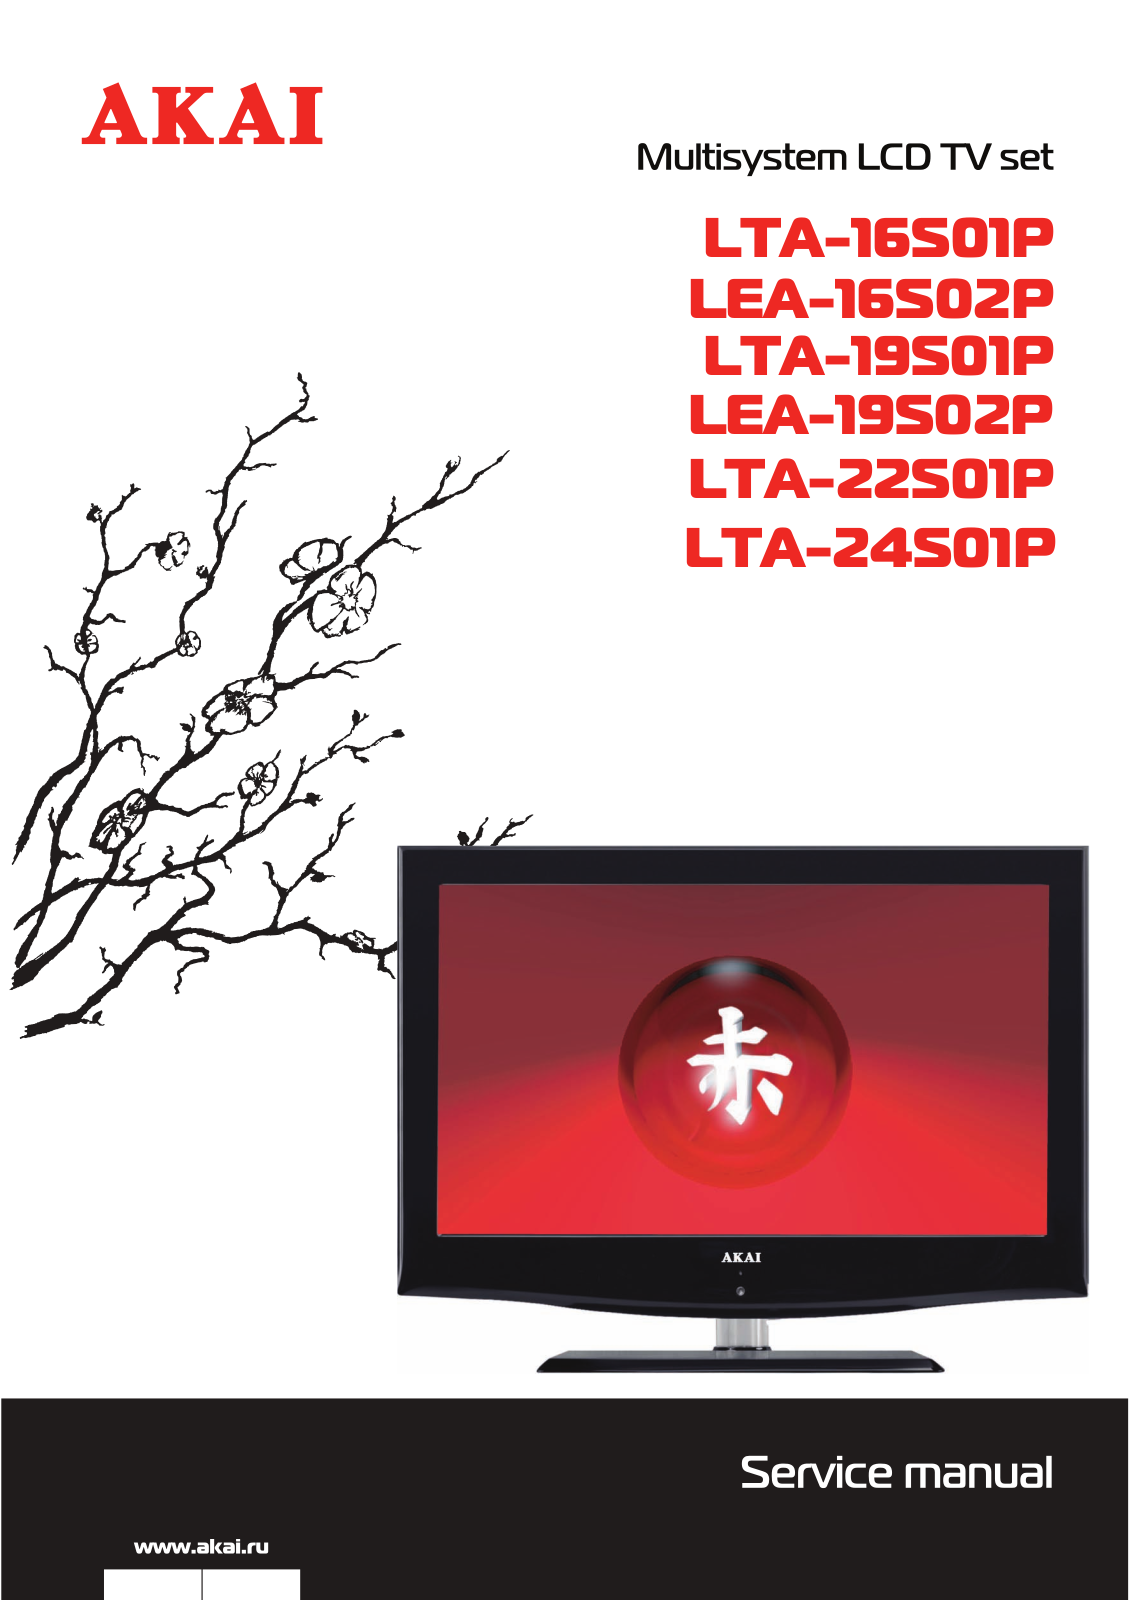 Akai LTA-16S01P Schematic